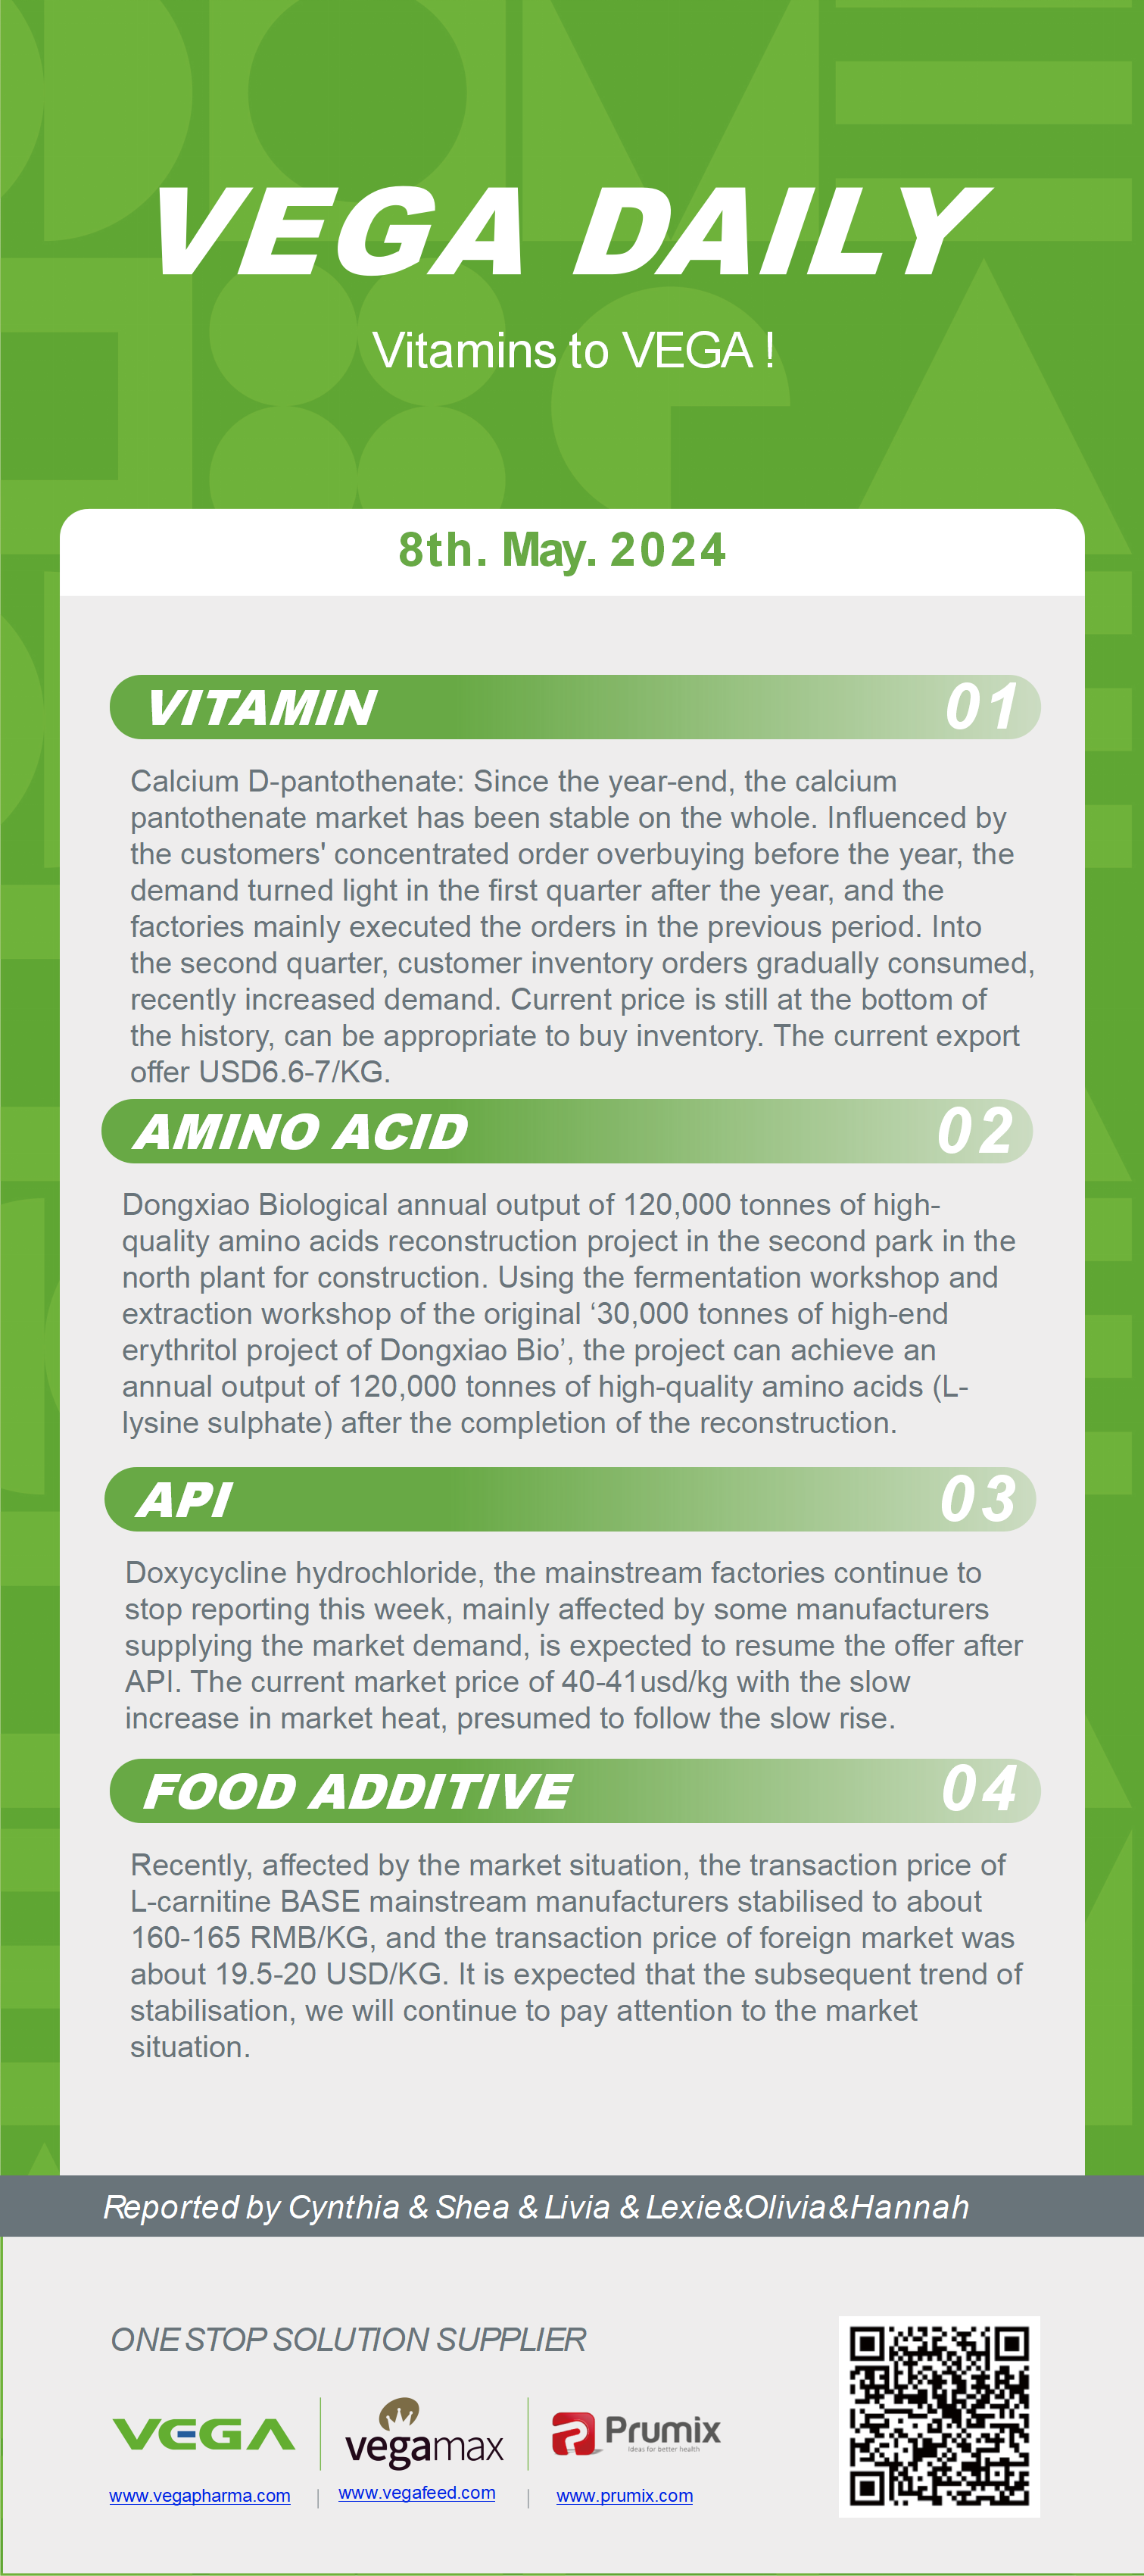 Vega Daily Dated on May 8th 2024 Vitamin Amino Acid APl Food Additives.png